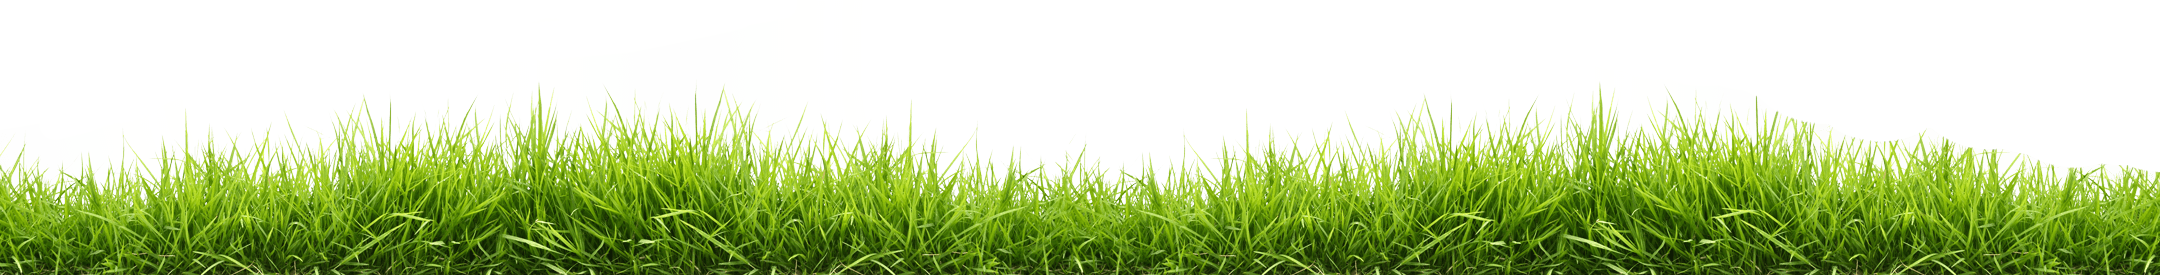 Yeşil çim şeffaf arka plan